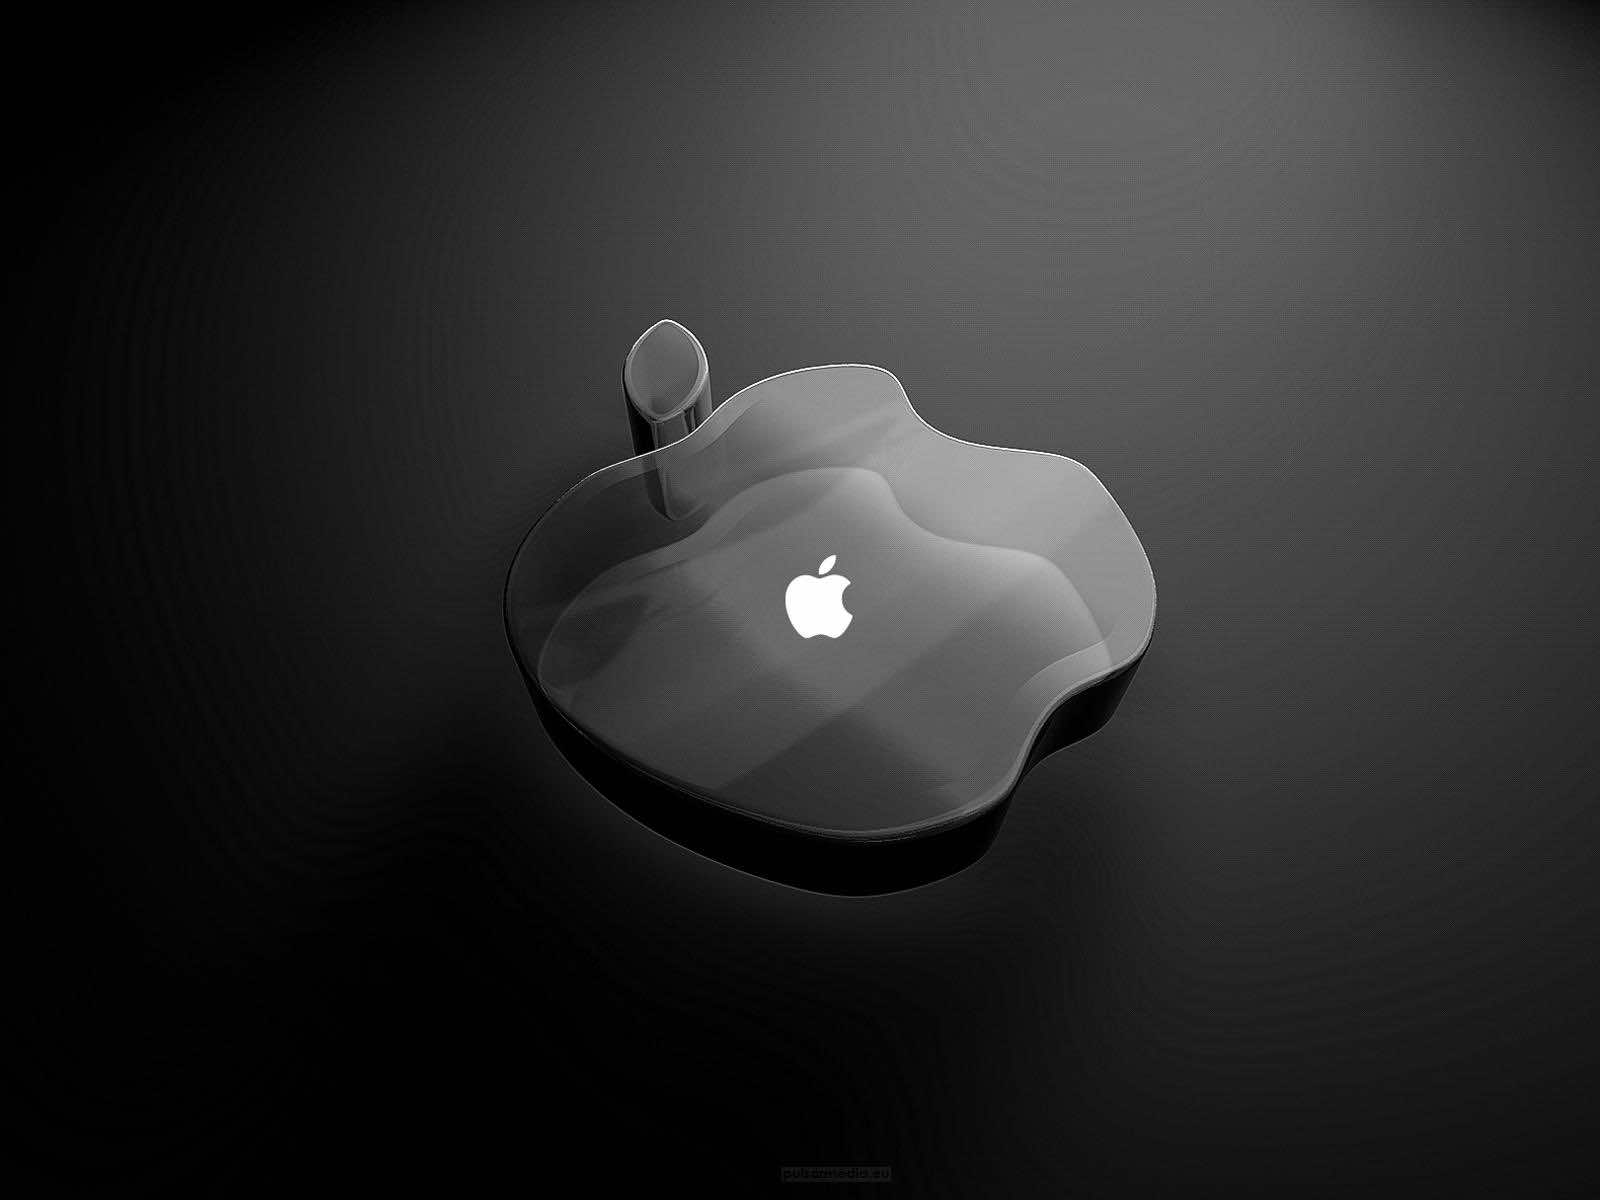 mycopper image downloader for mac